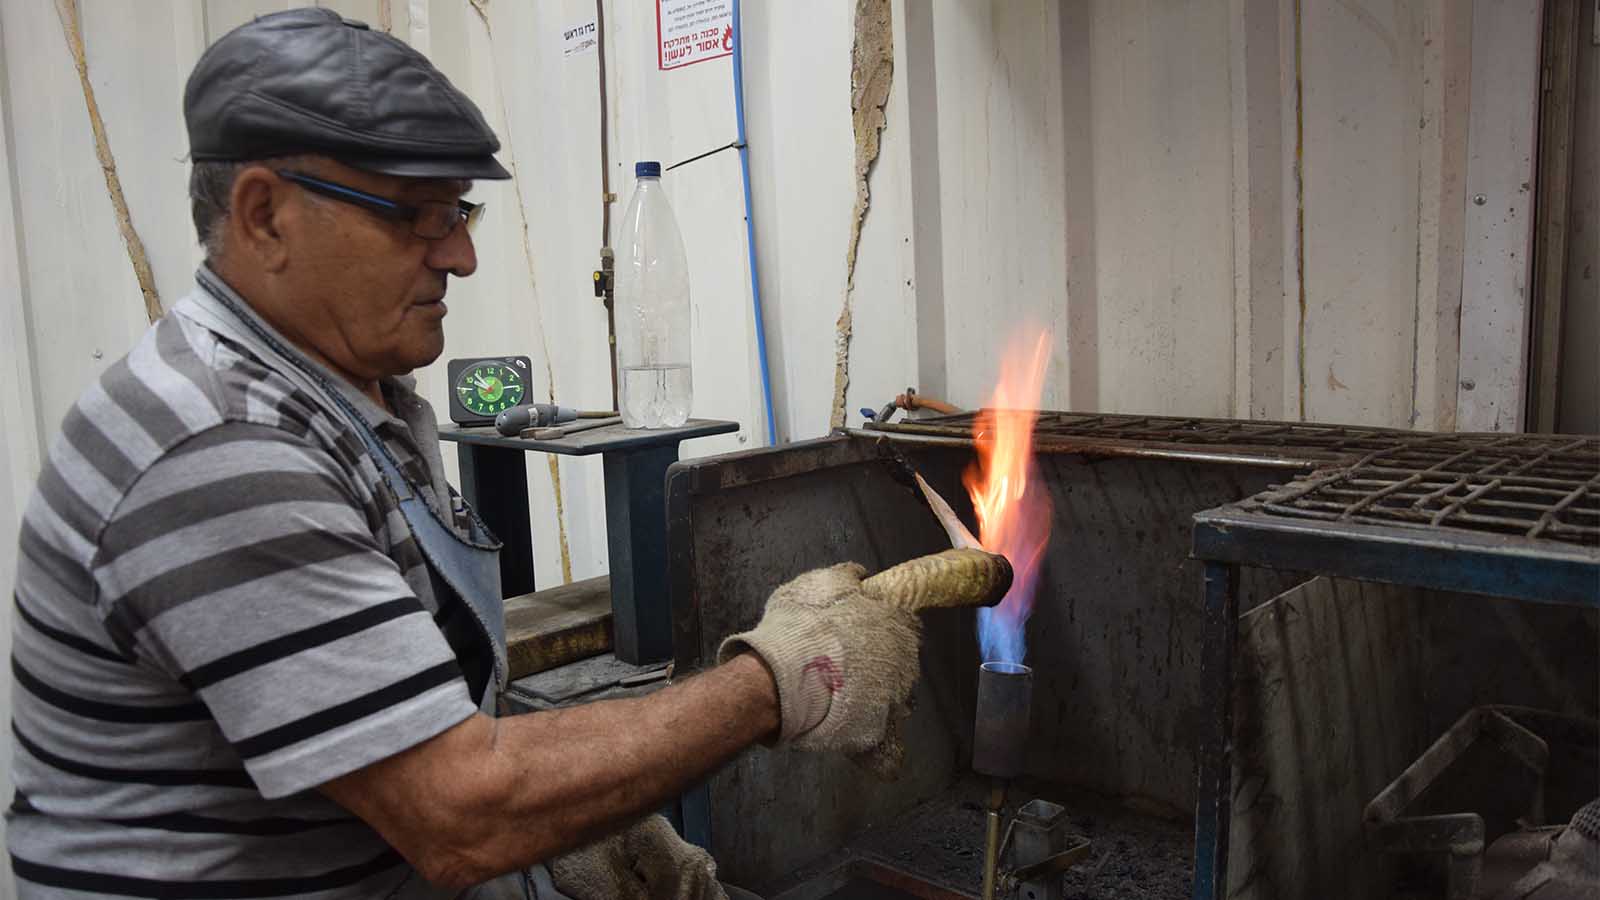 The shofar making factory in the Golan Heights. Credit: Yael Elnatan